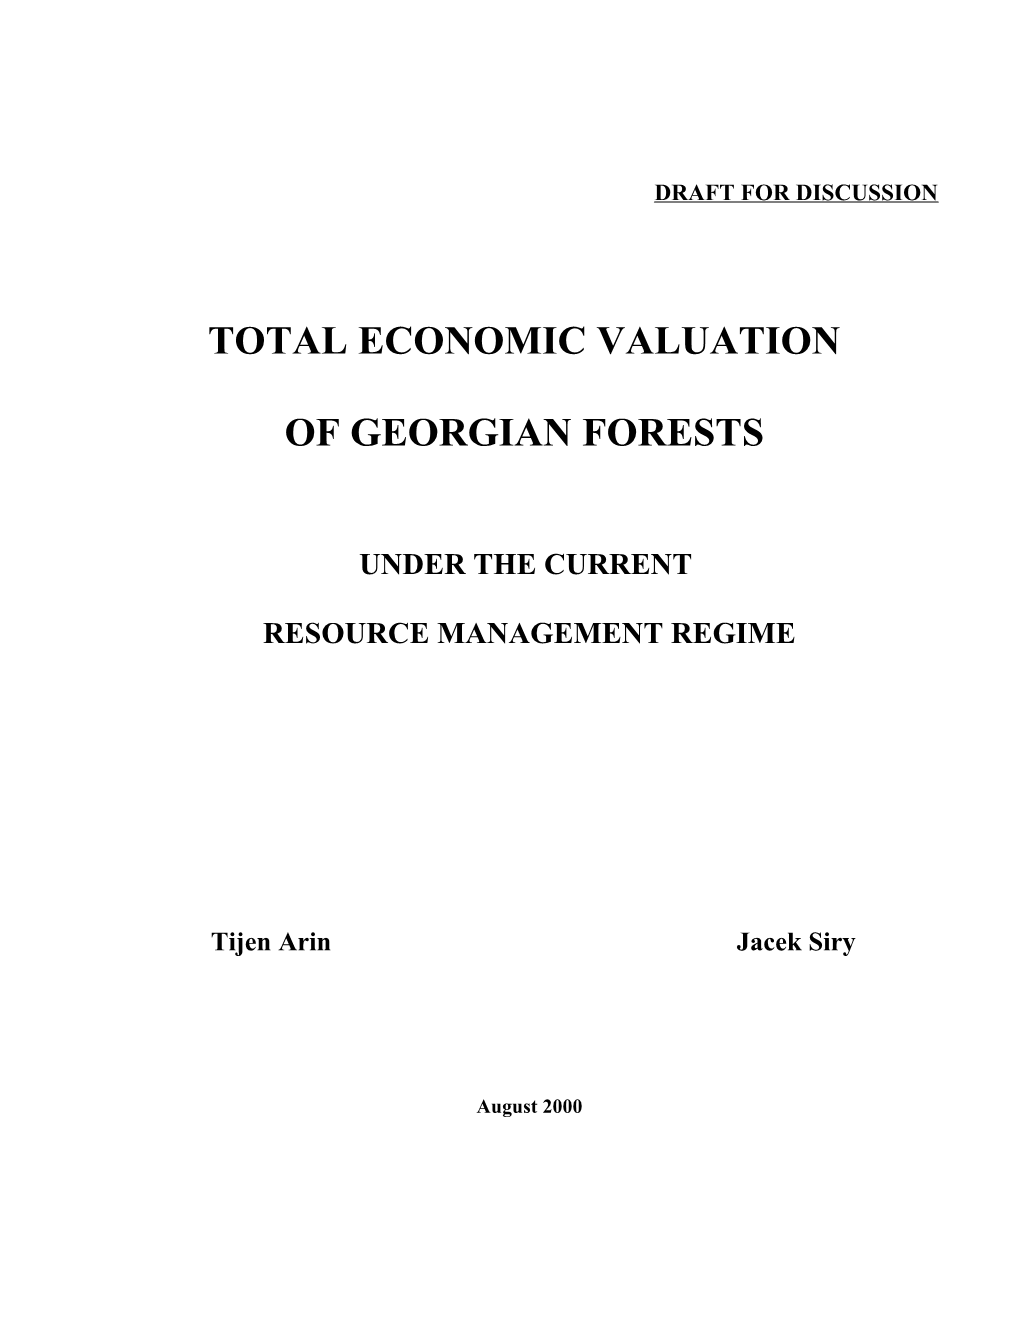 Total Economic Valuation